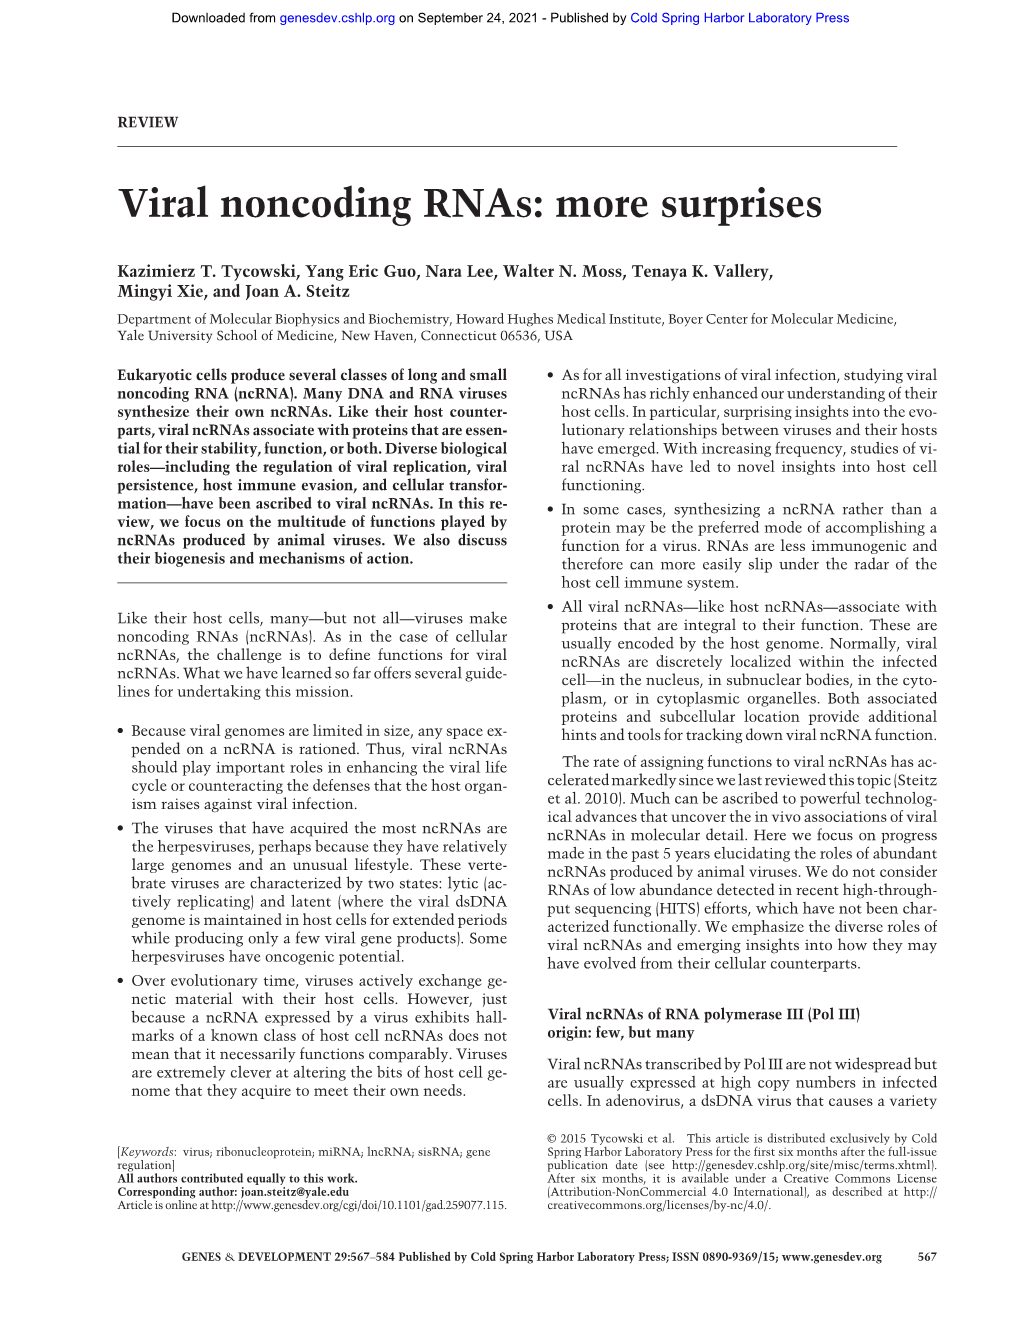 Viral Noncoding Rnas: More Surprises